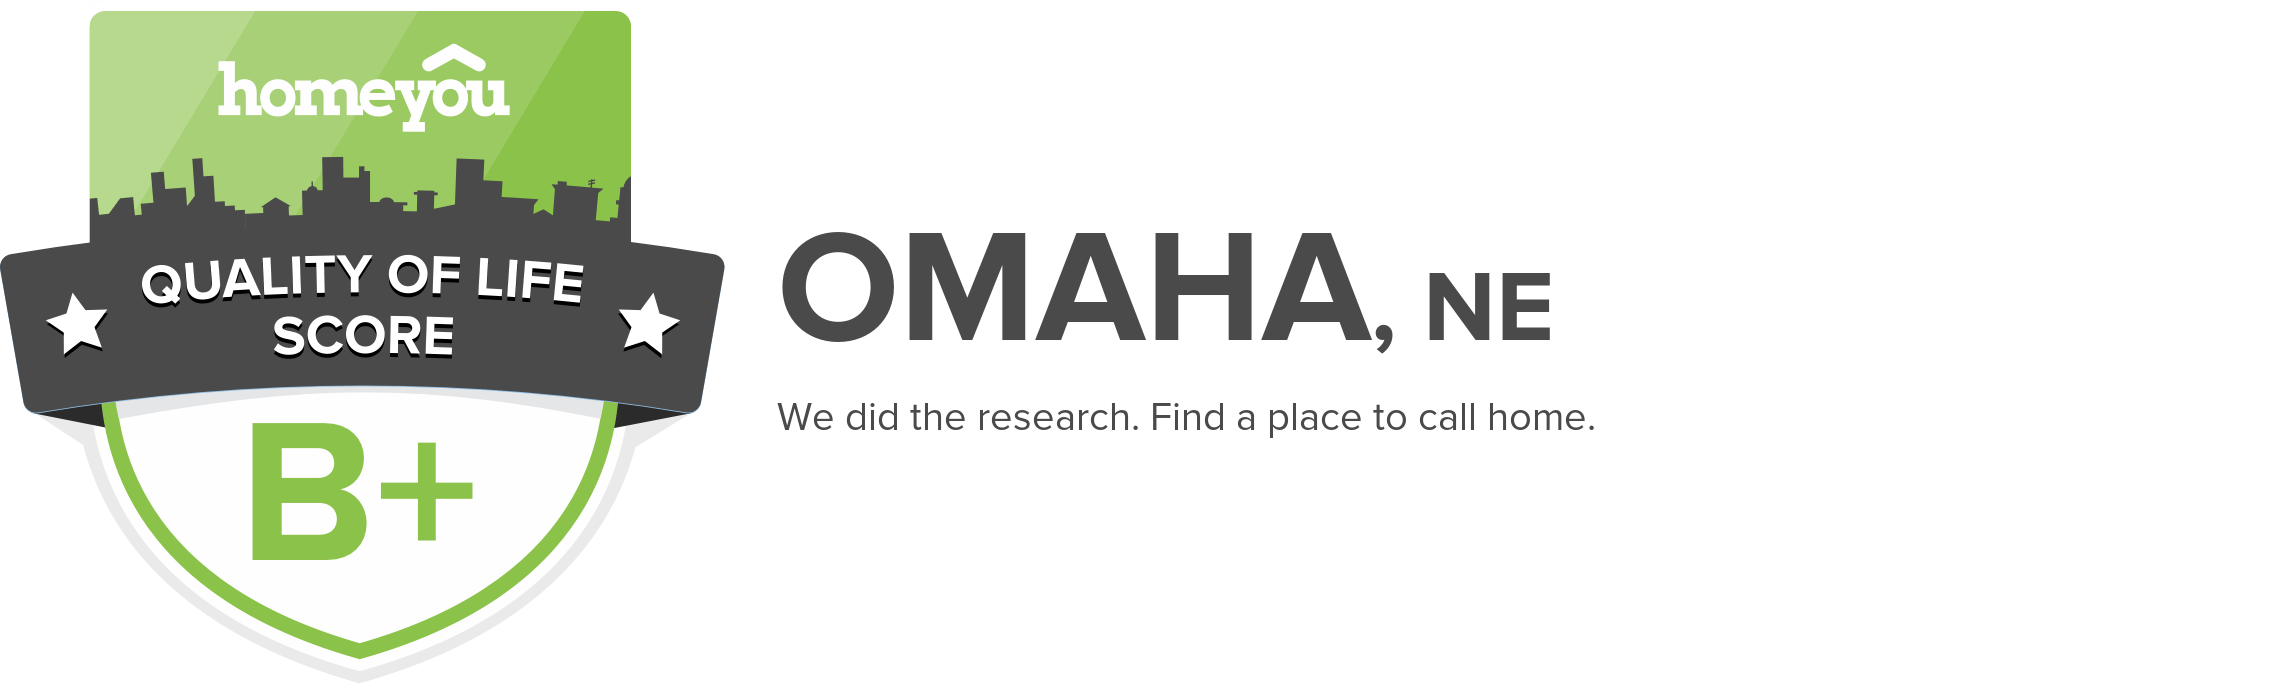 Omaha, NE